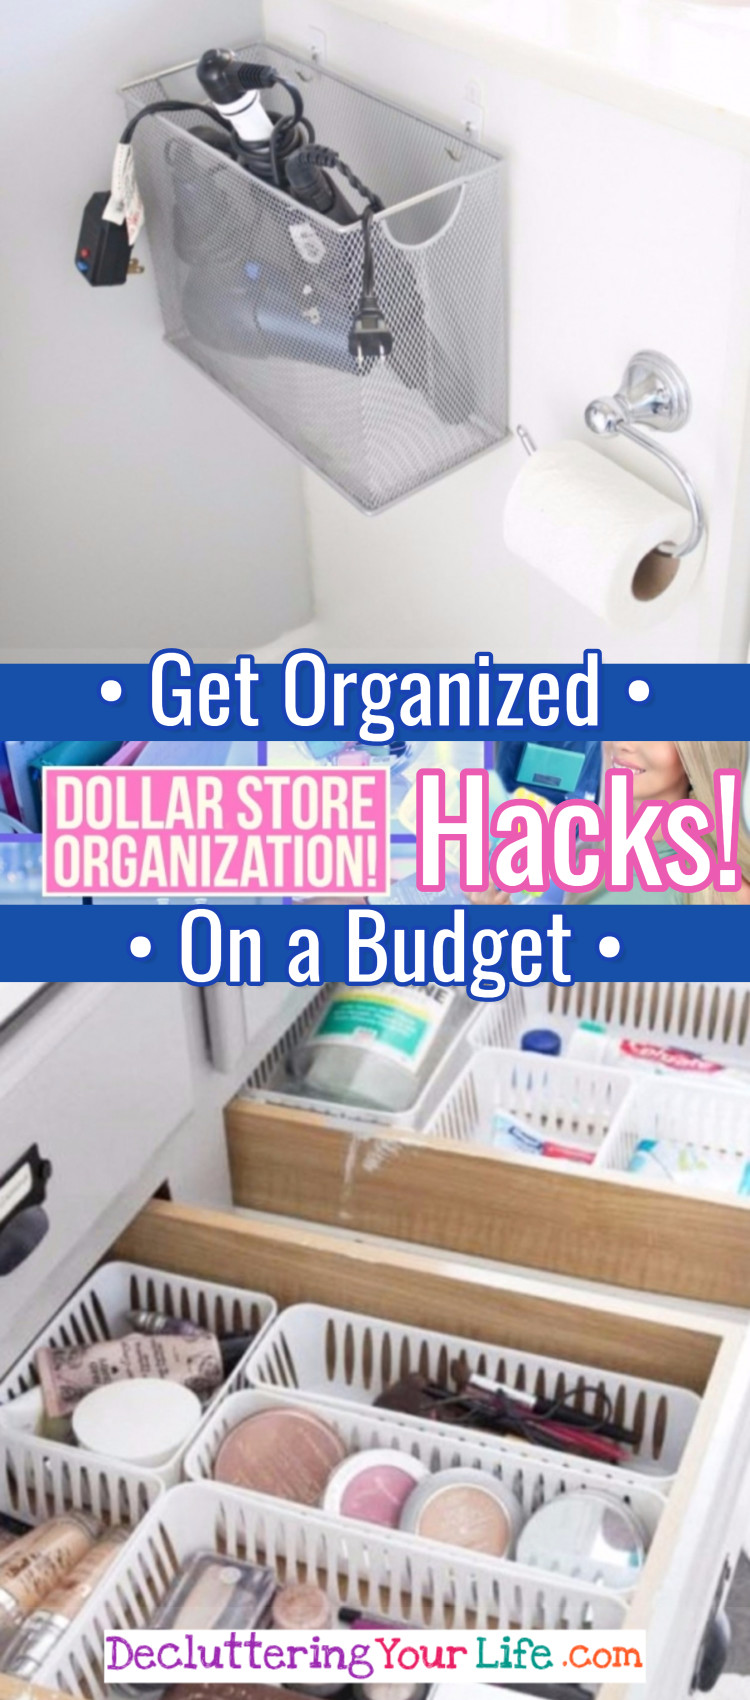 Dollar Store Organizing on a Budget! DIY organizing ideas for getting organized on a budget using dollar stores items